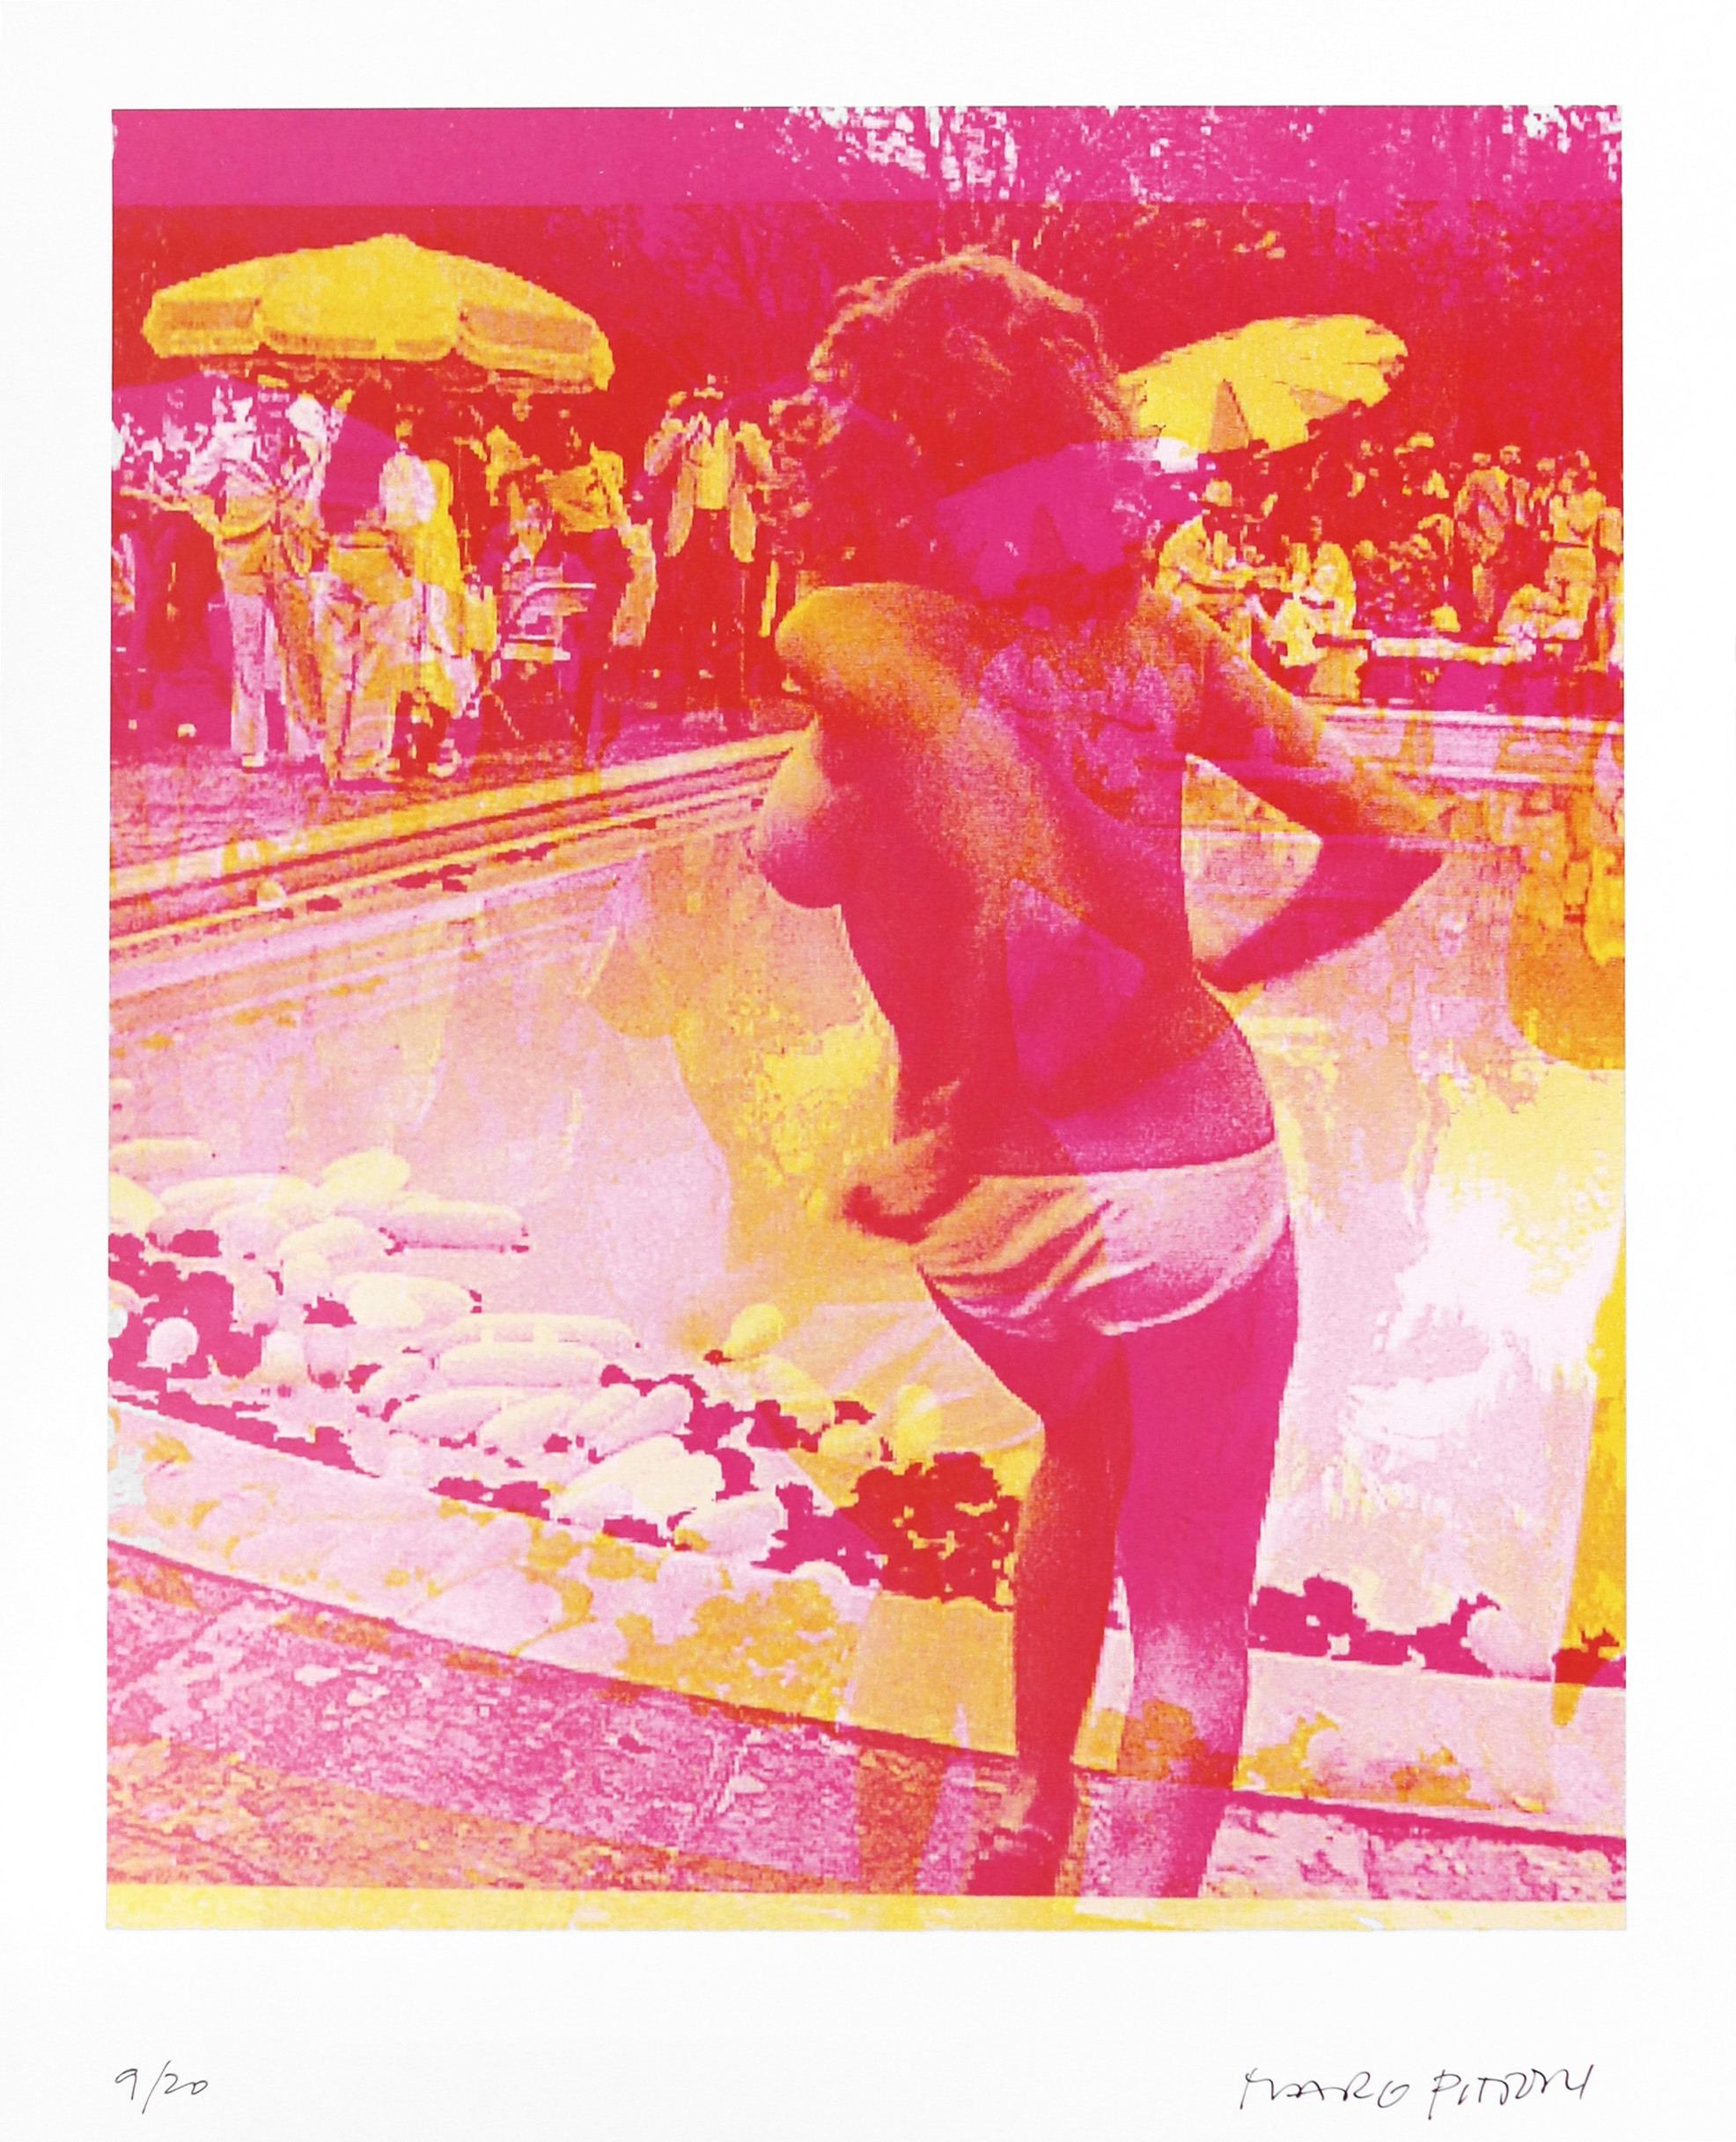 Figurative Photograph Marco Pittori - Swimming Pool rose AP (9/20)